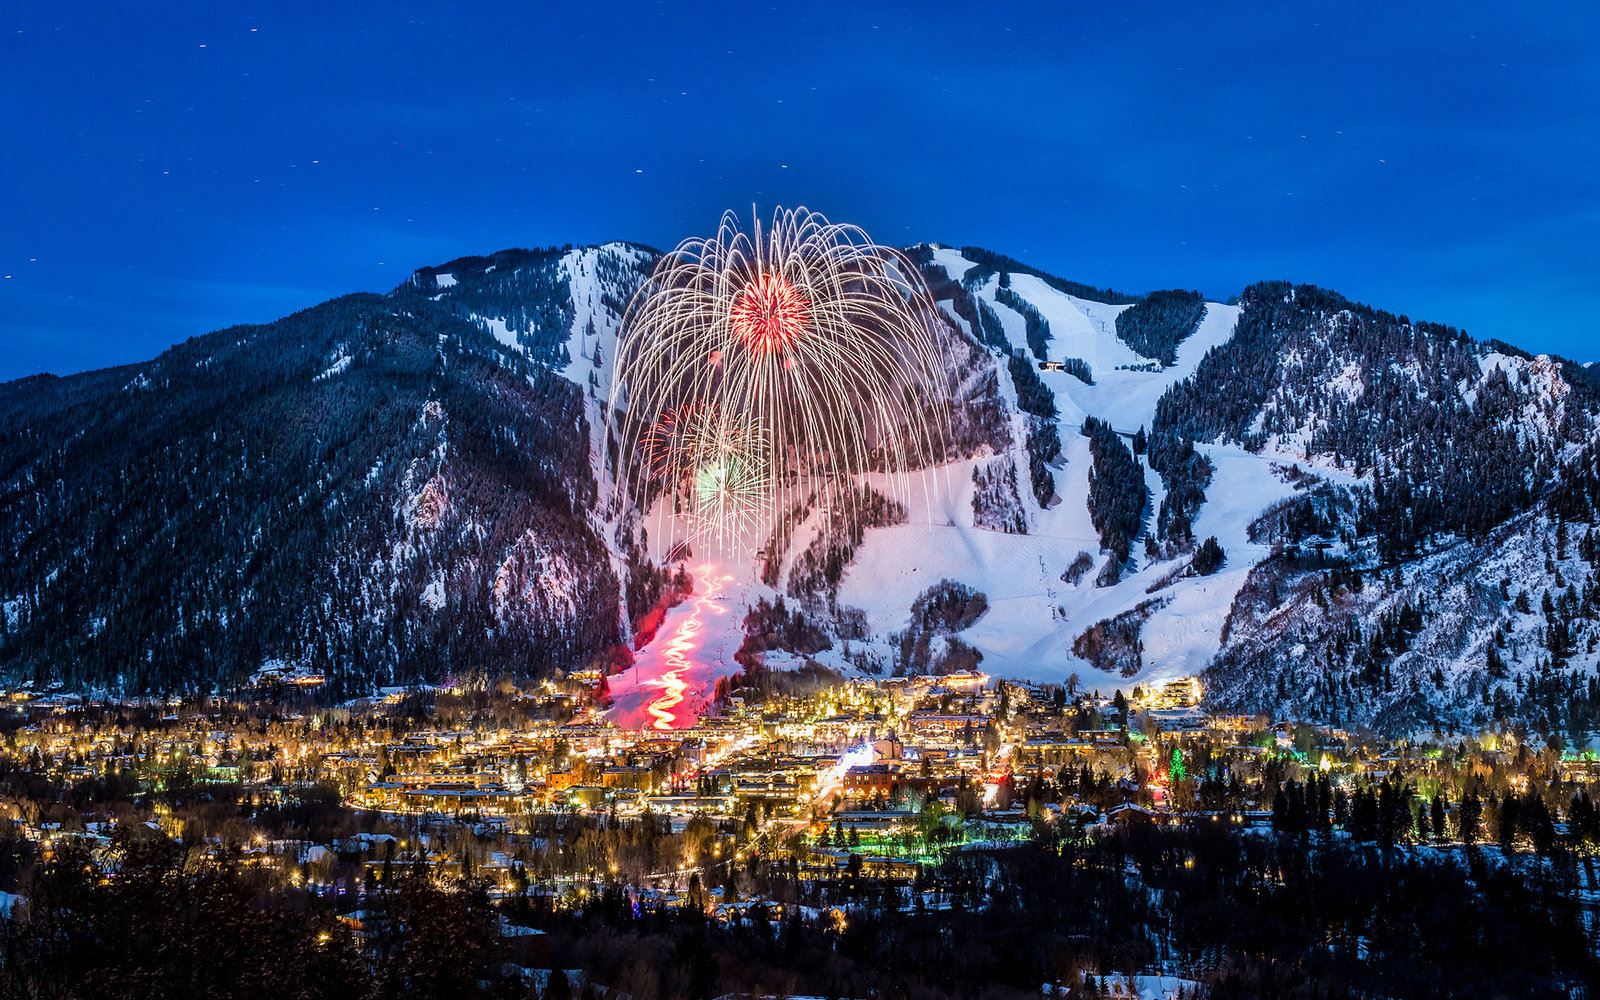 New Year's Eve Fireworks over Aspen